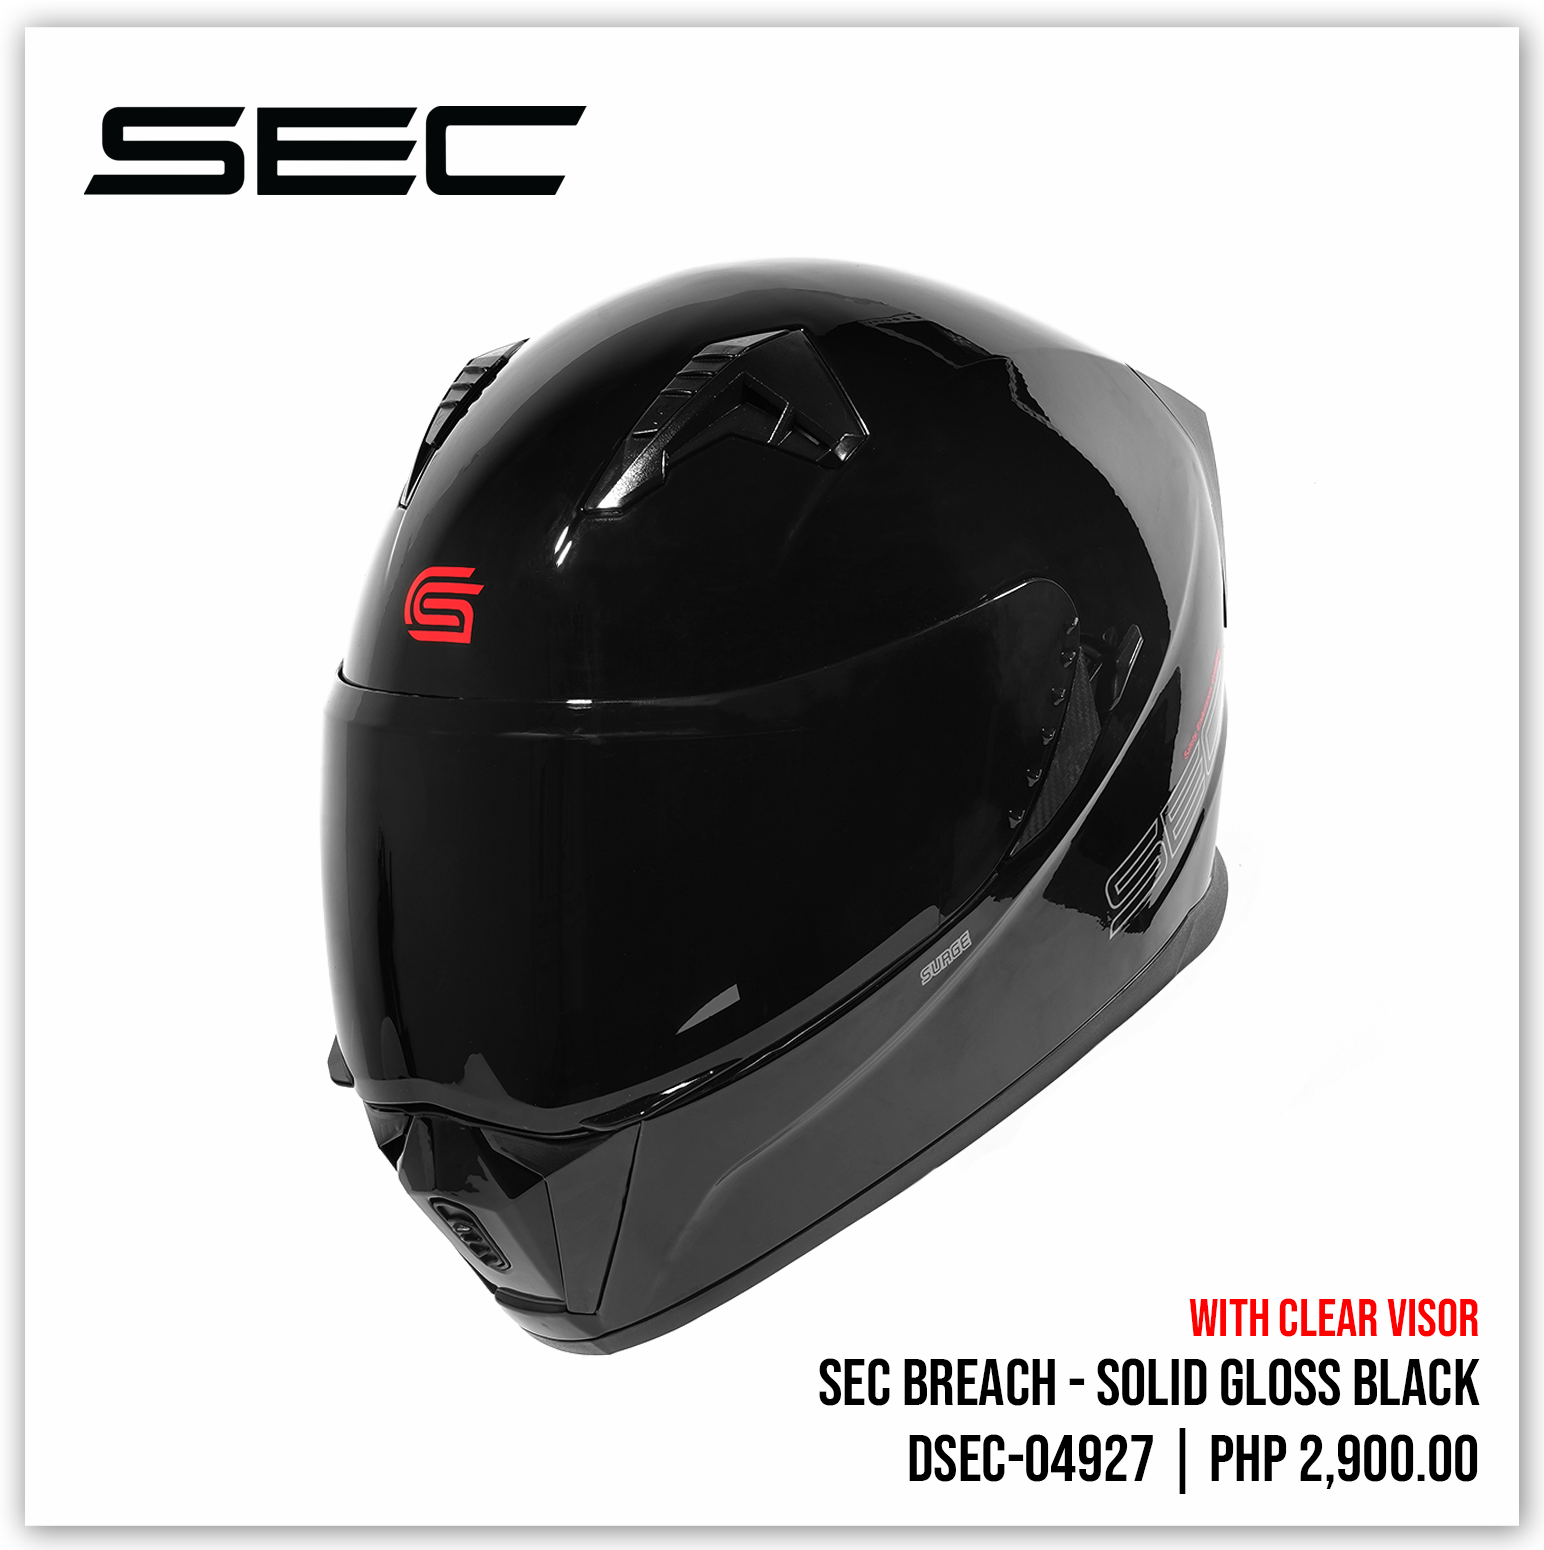 SEC Breach - Solid Gloss Black